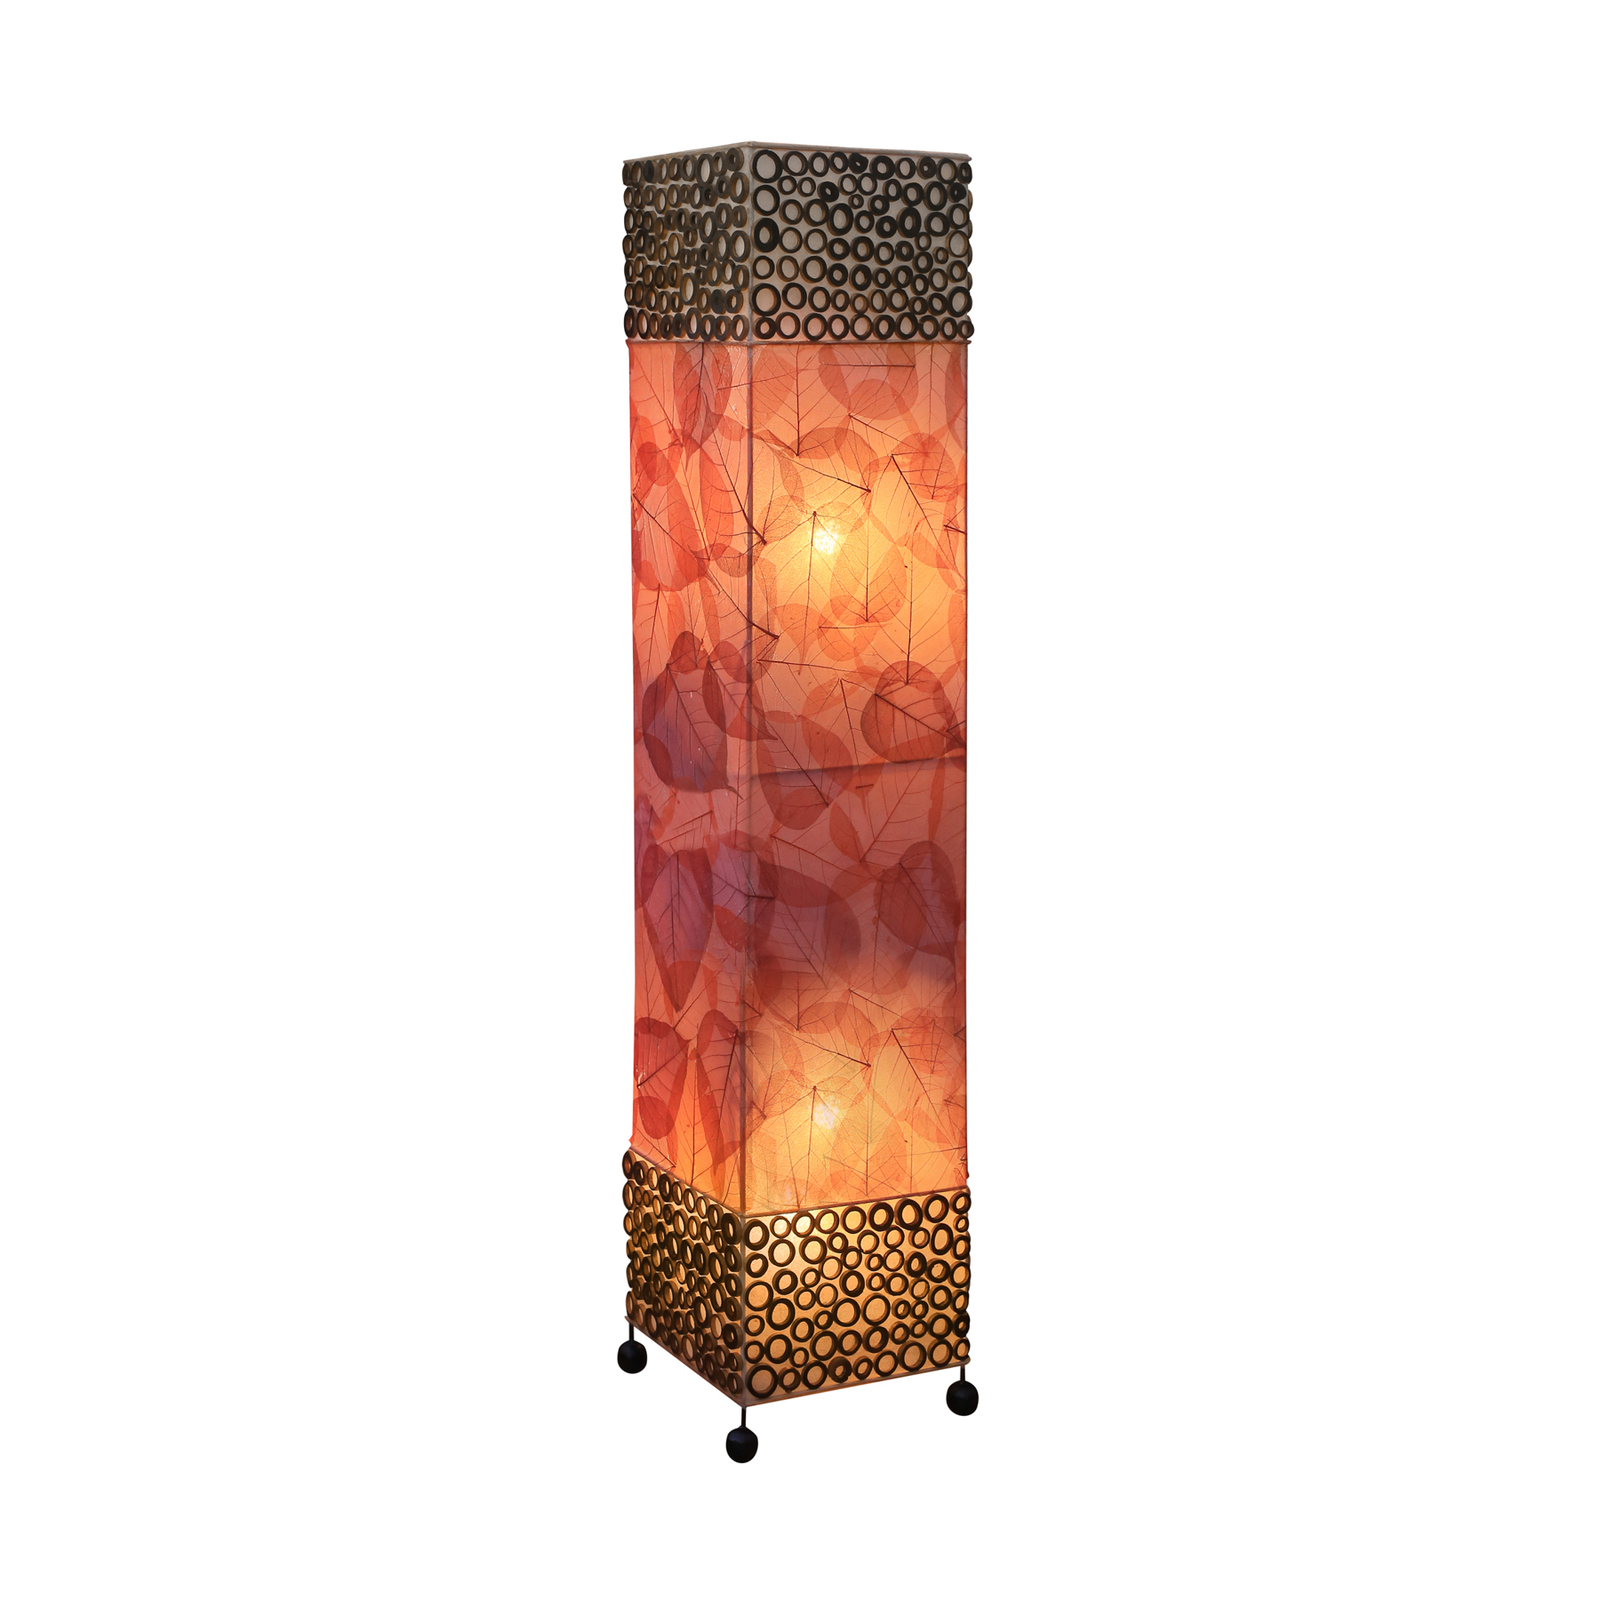 Emilian floor lamp with leaf motif, height 100 cm